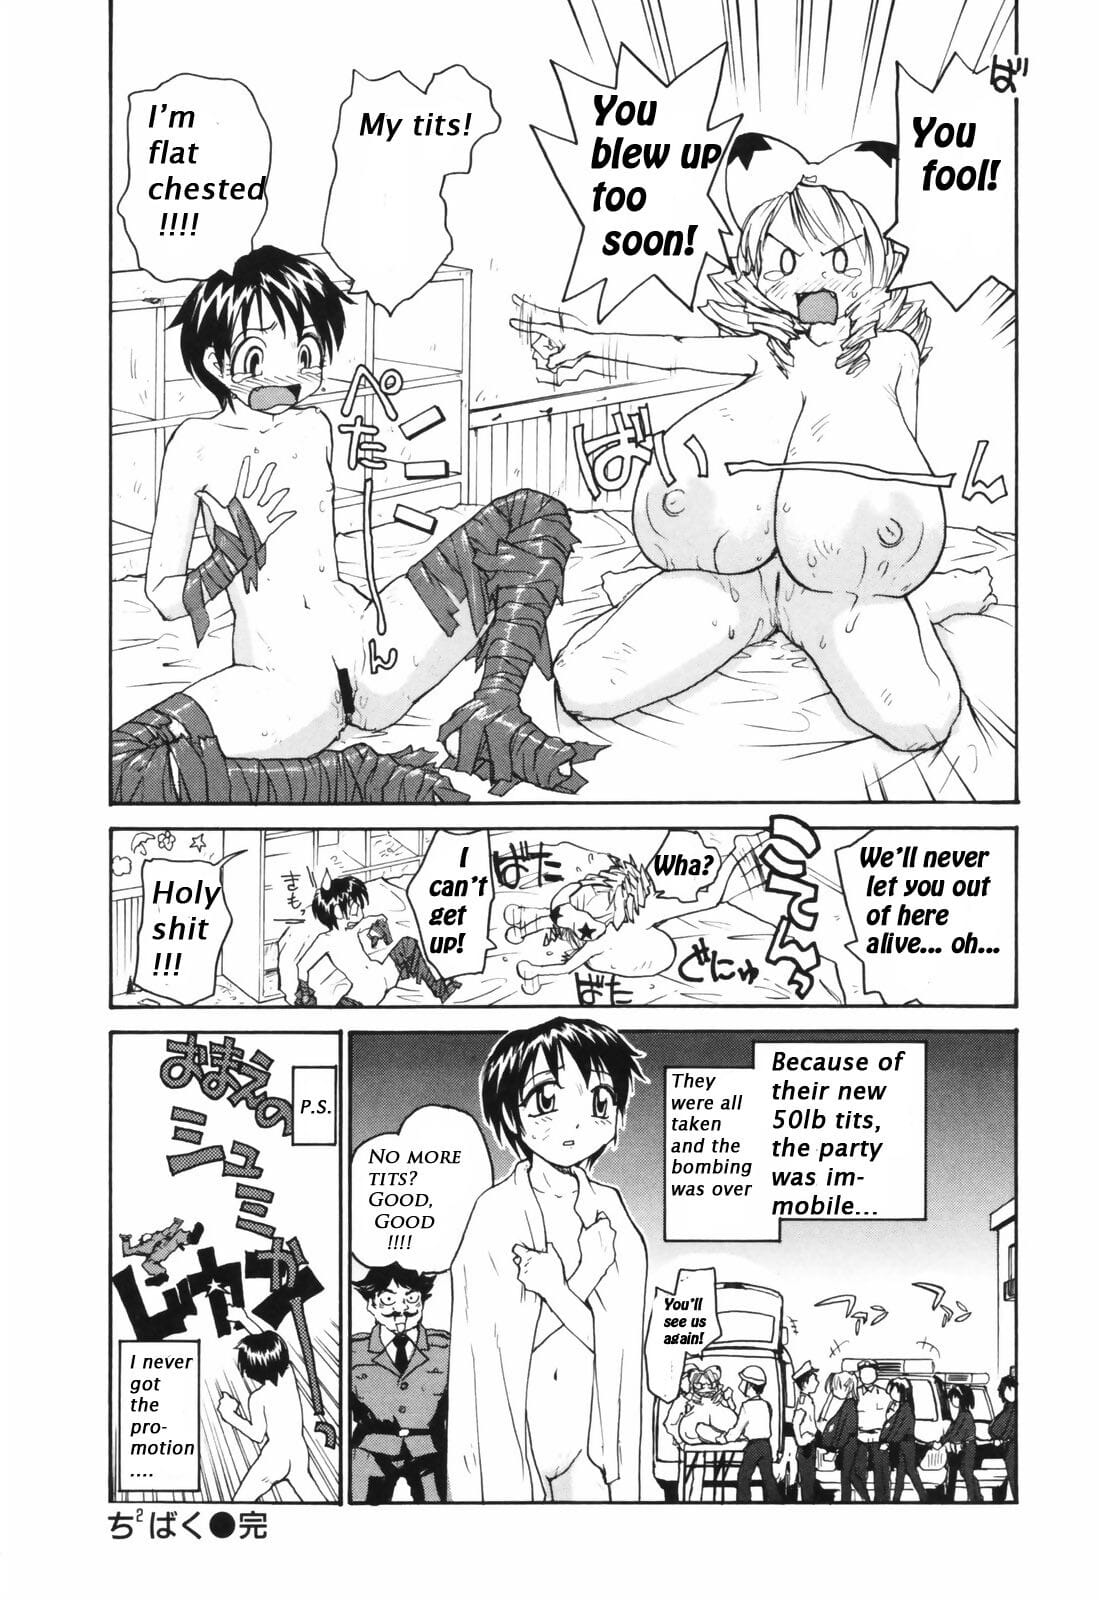 Chichi 巴库 Chichi 轰炸机 boobicide 弹壳 page 1